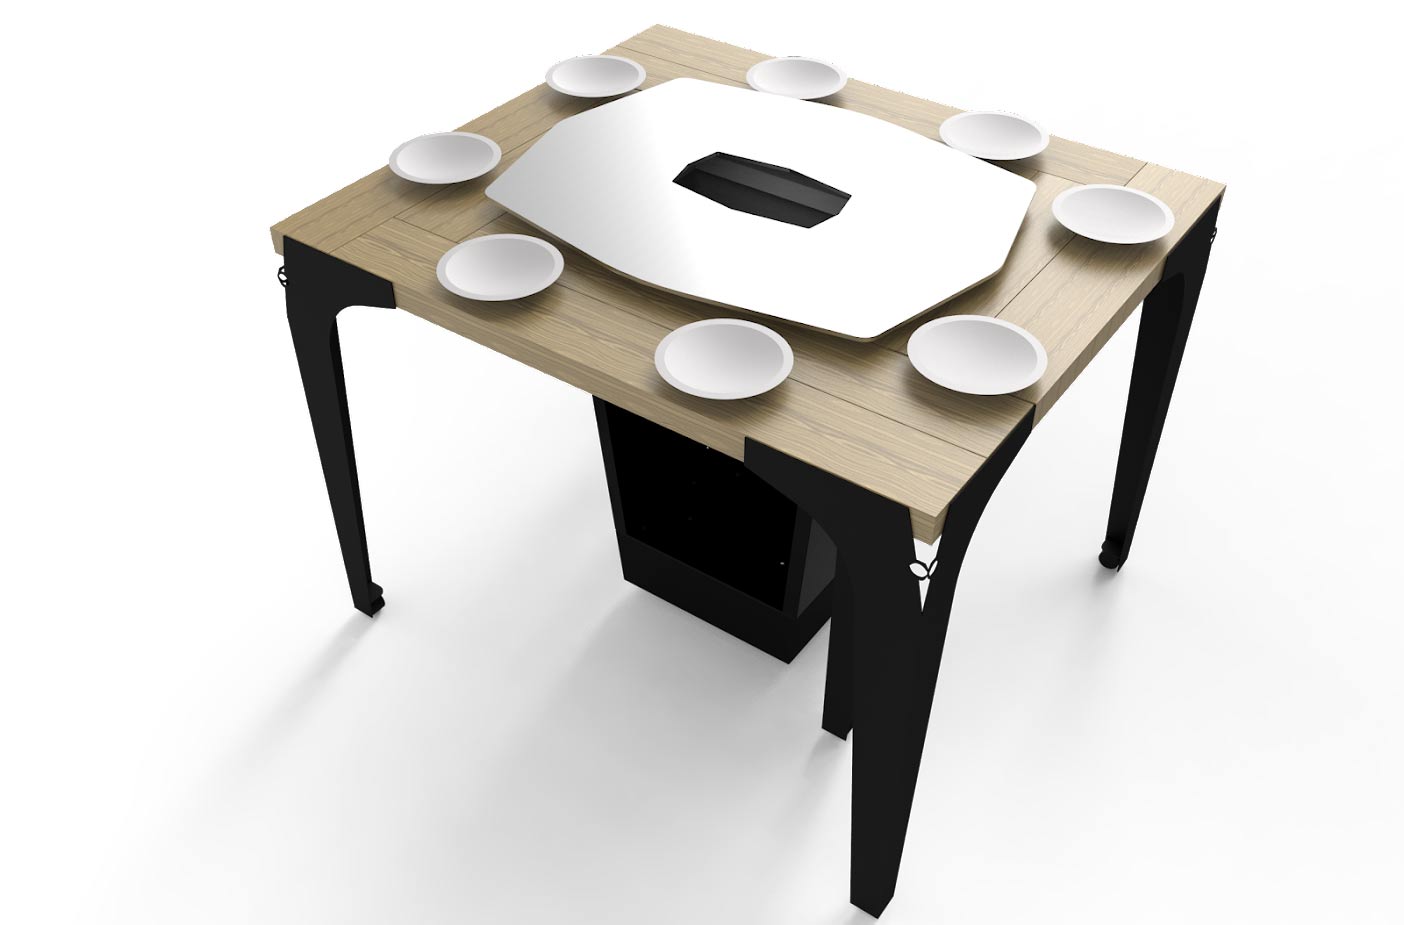 Brasero de table, achat brasero design : Brasero Industrie Concept